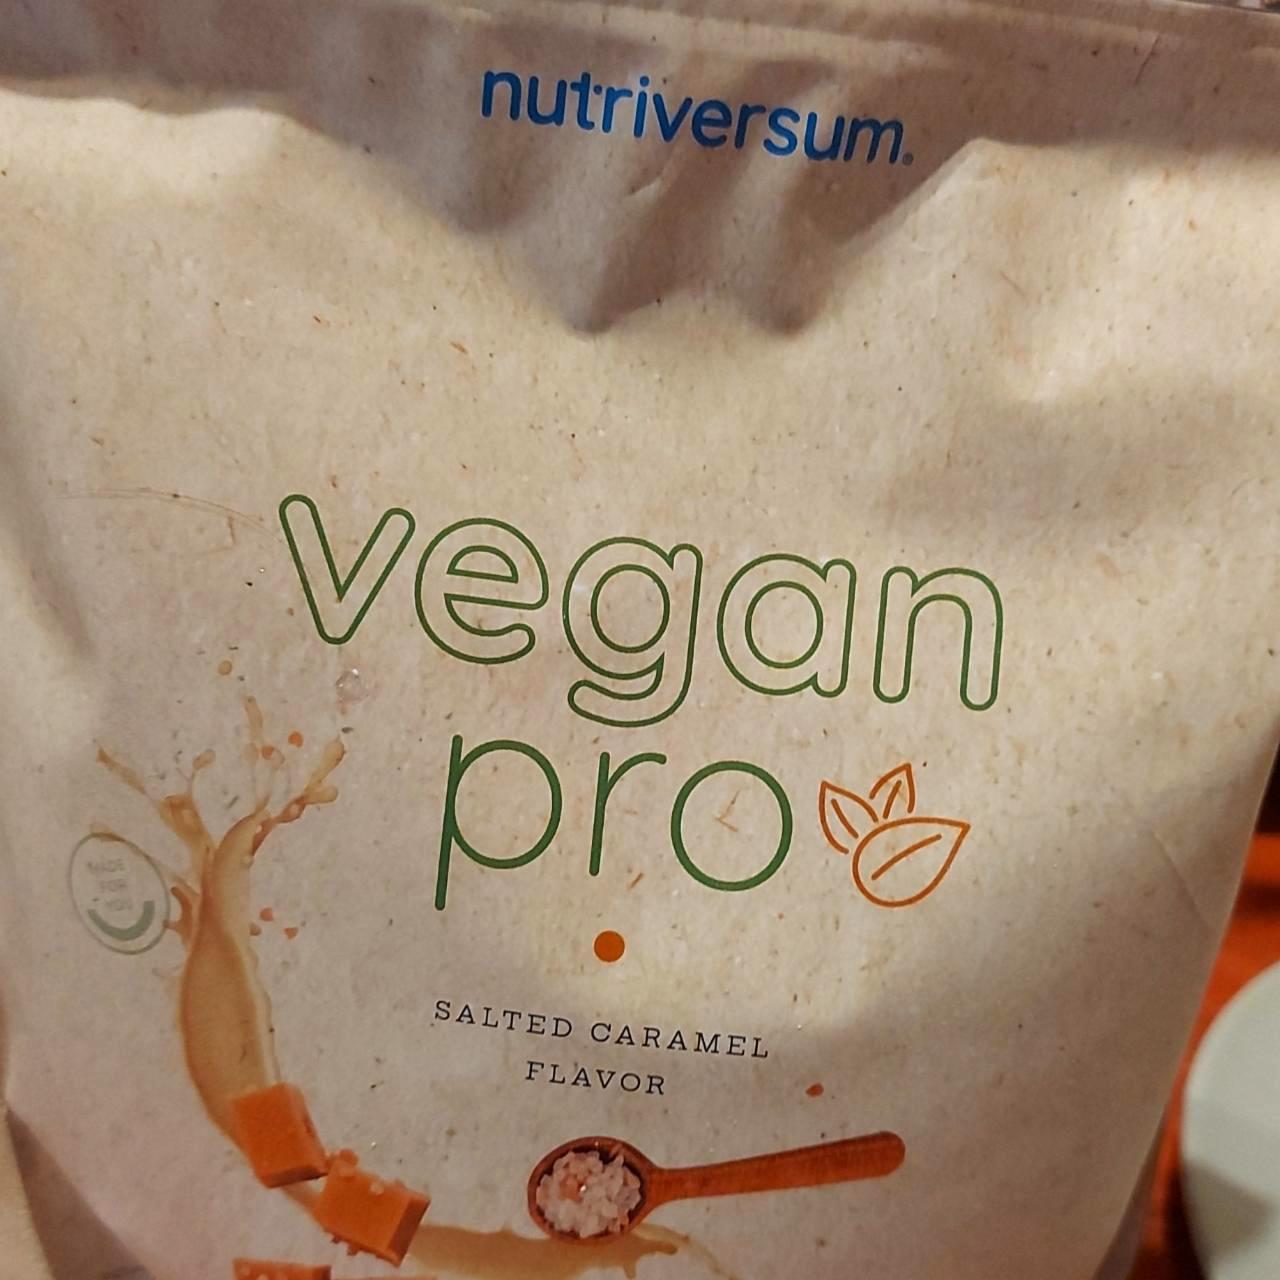 Képek - Vegan pro salted caramel flavor Nutriversum